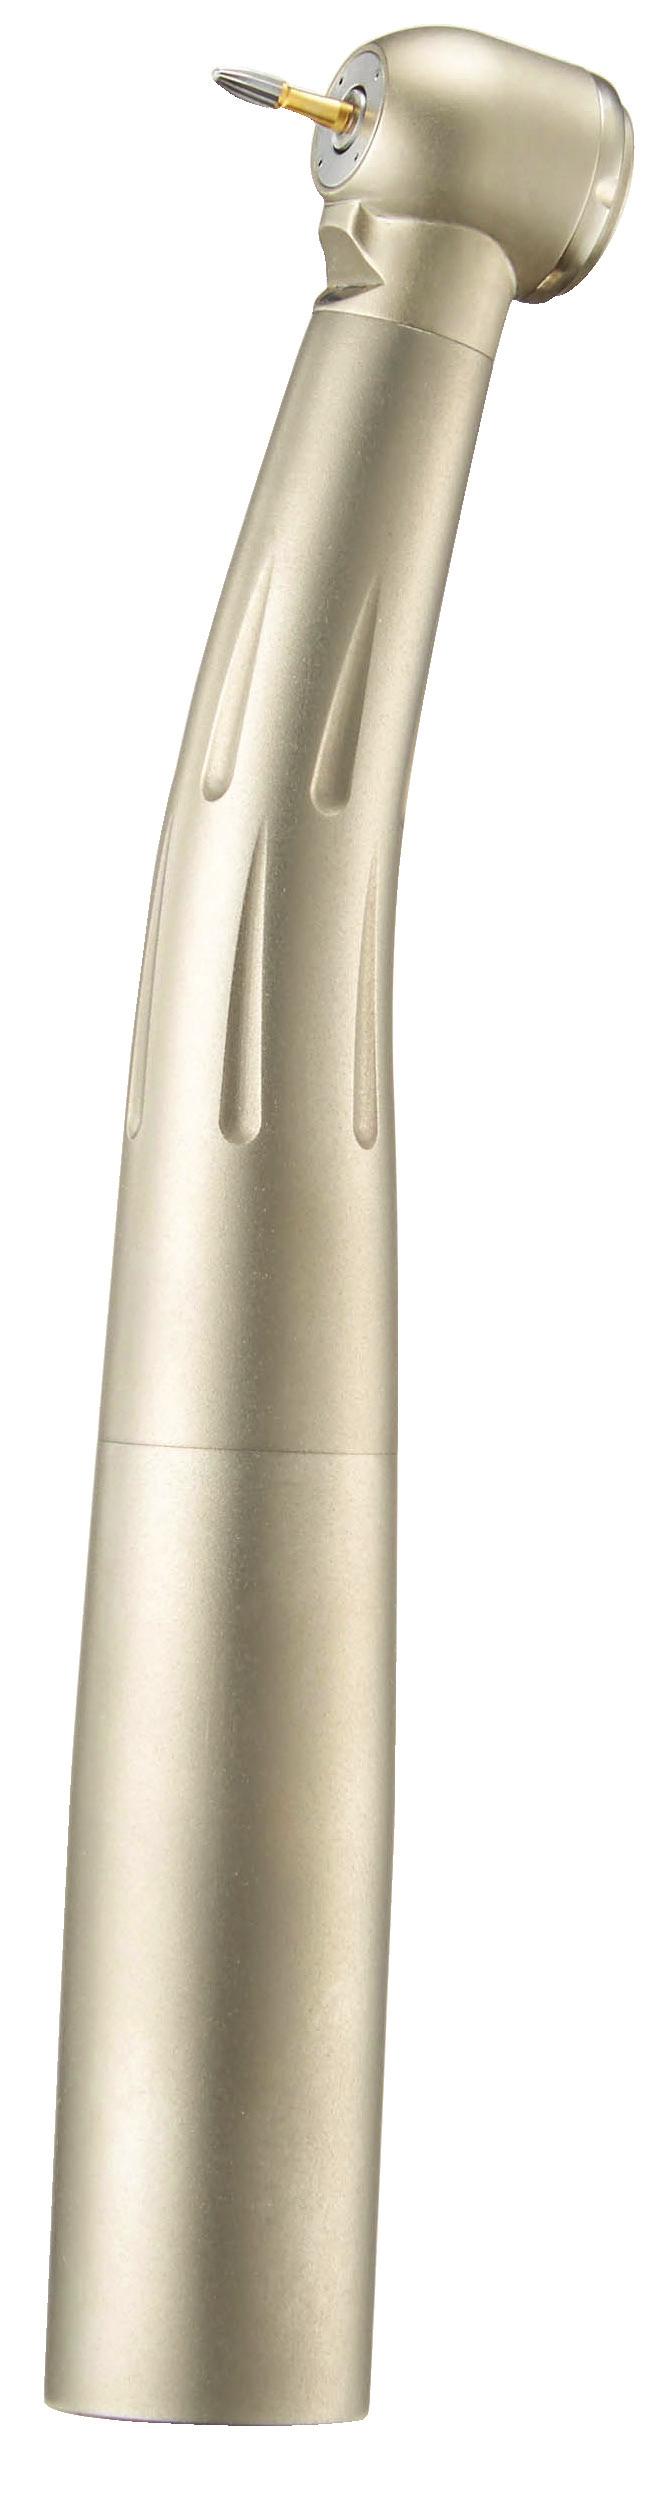 450 Euro - Titan Quick Coupling Connection/Fiber-Optic TORQUE HEAD SERIES Body Ceramic Bearing Precision-Balanced